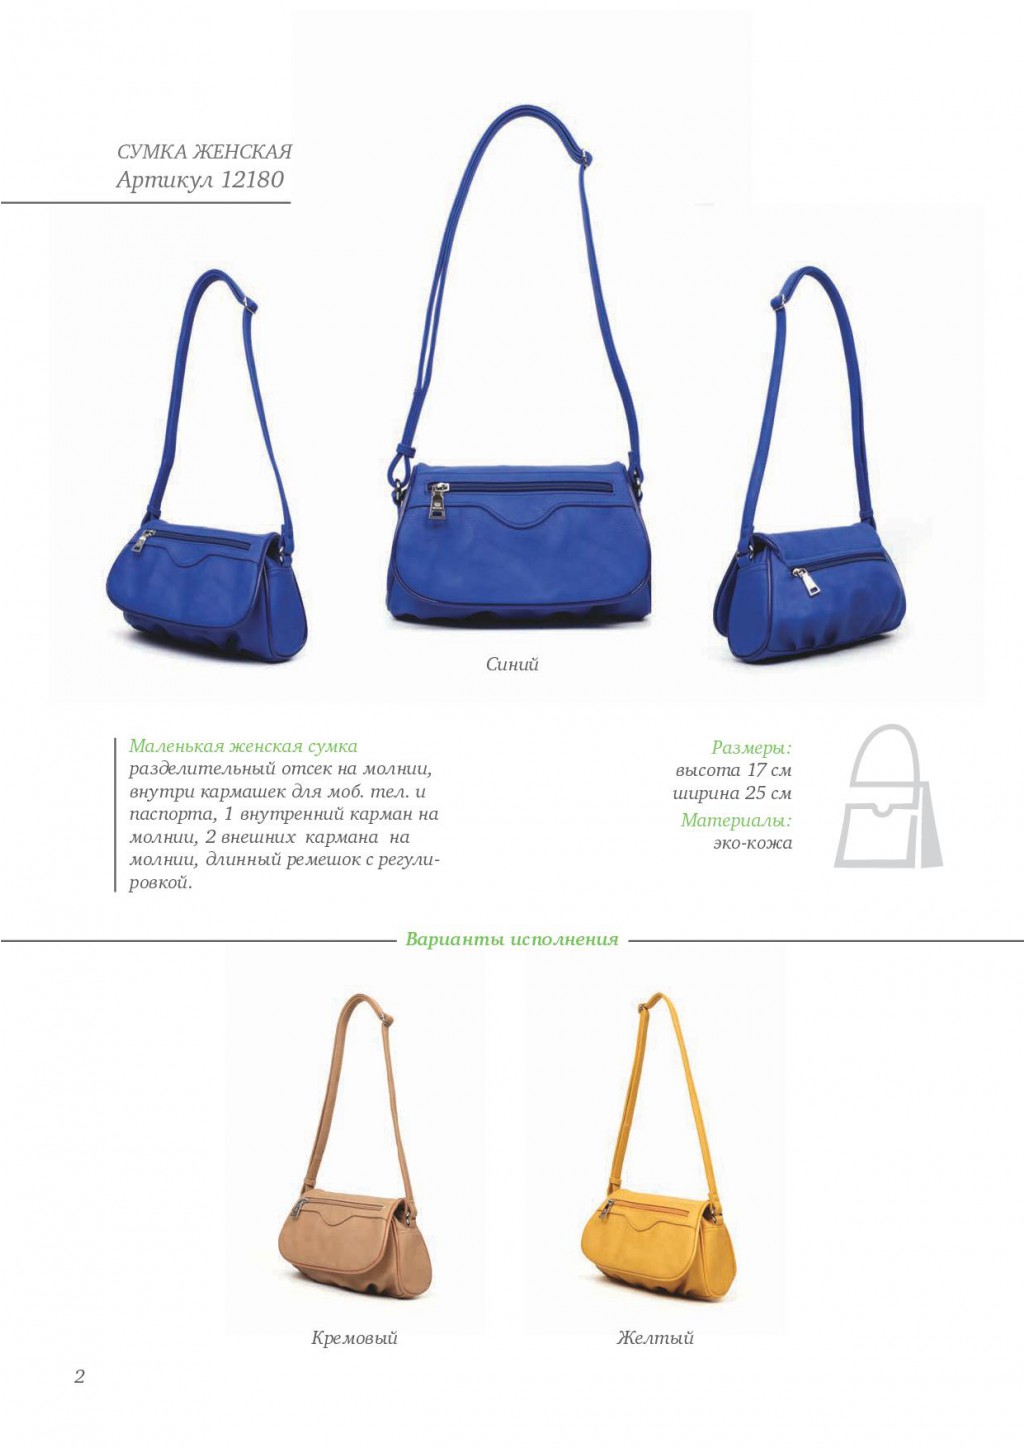 catalog of bags_Sumer2014_WEB-003.jpg